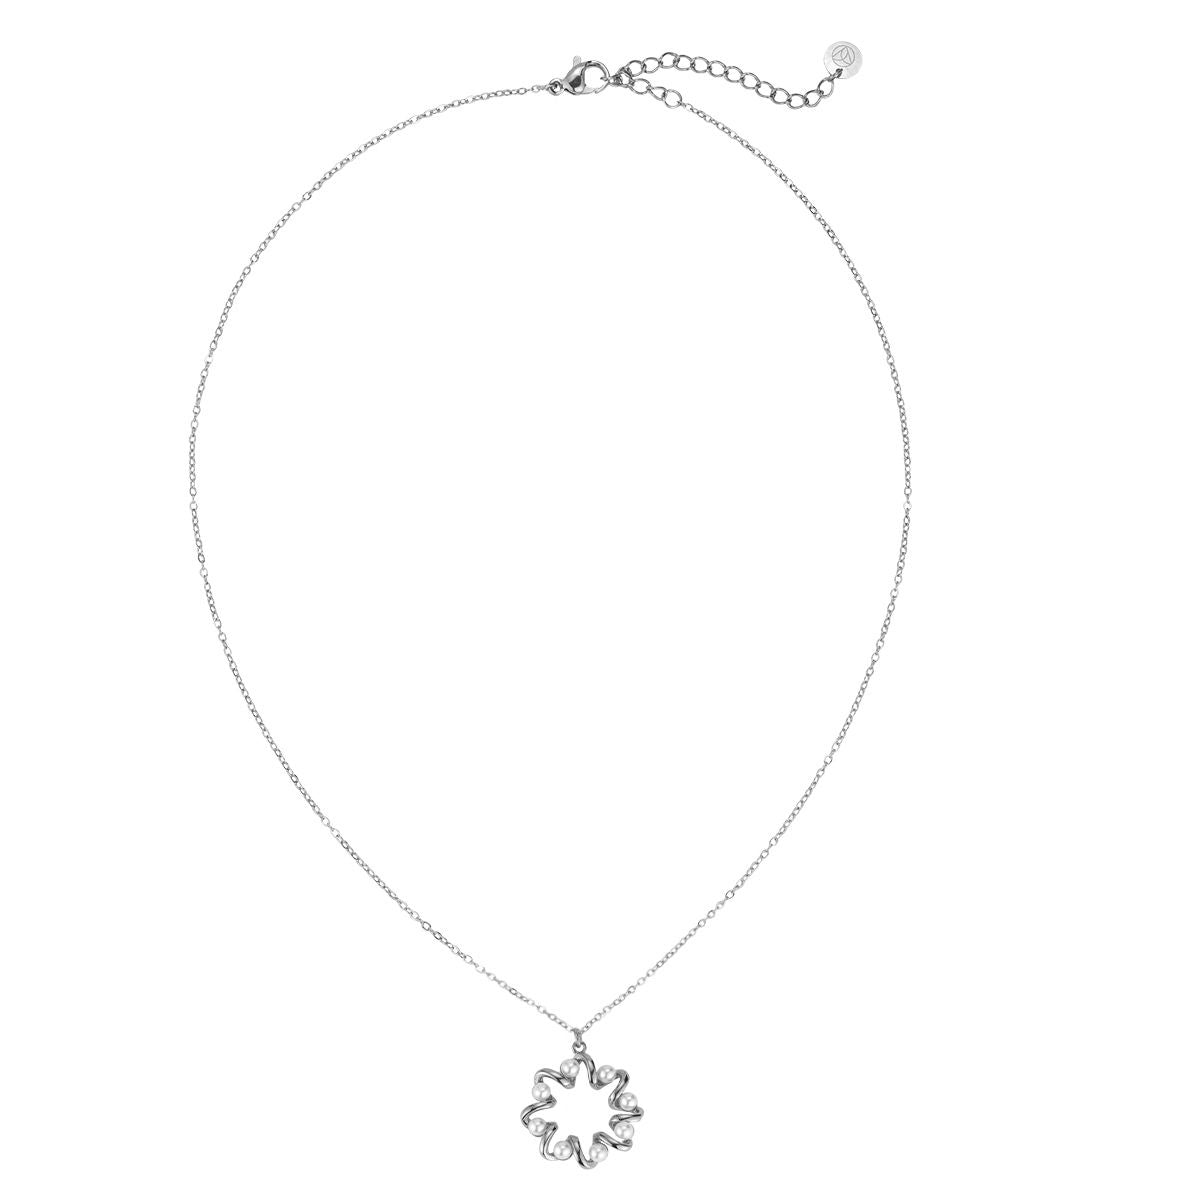 Halskette "Twist Pearl" Edelstahl 14K vergoldet in zwei Farben